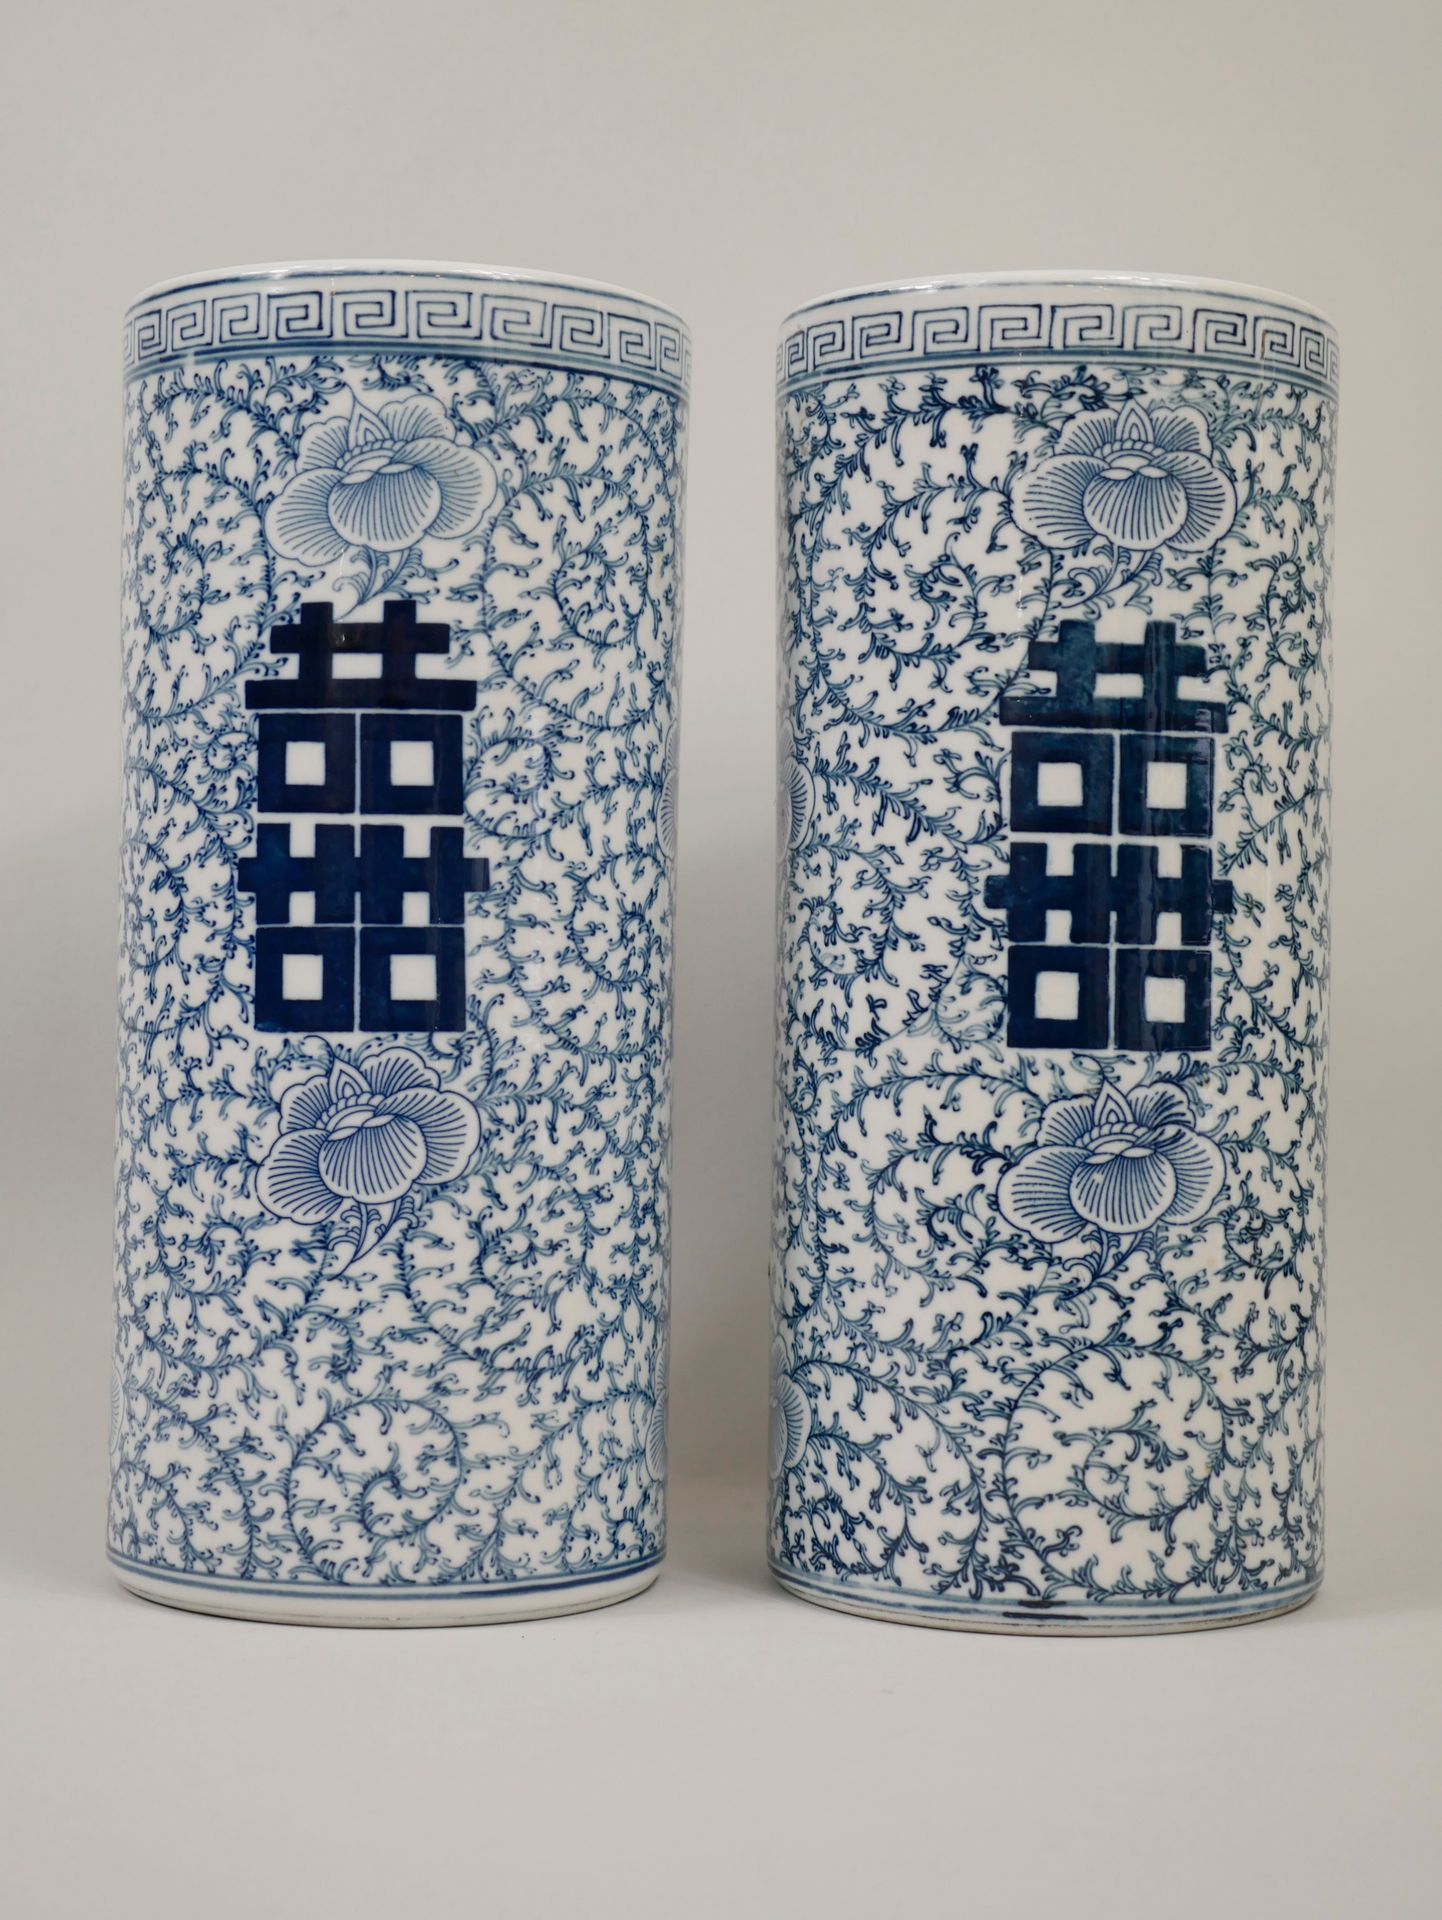 Null 中国，20世纪。 两个卷轴花瓶，装饰有鲜花、卷轴和 "囍 "字。伪造的乾隆标记。蓝白釉瓷器。高28厘米。直径13厘米。